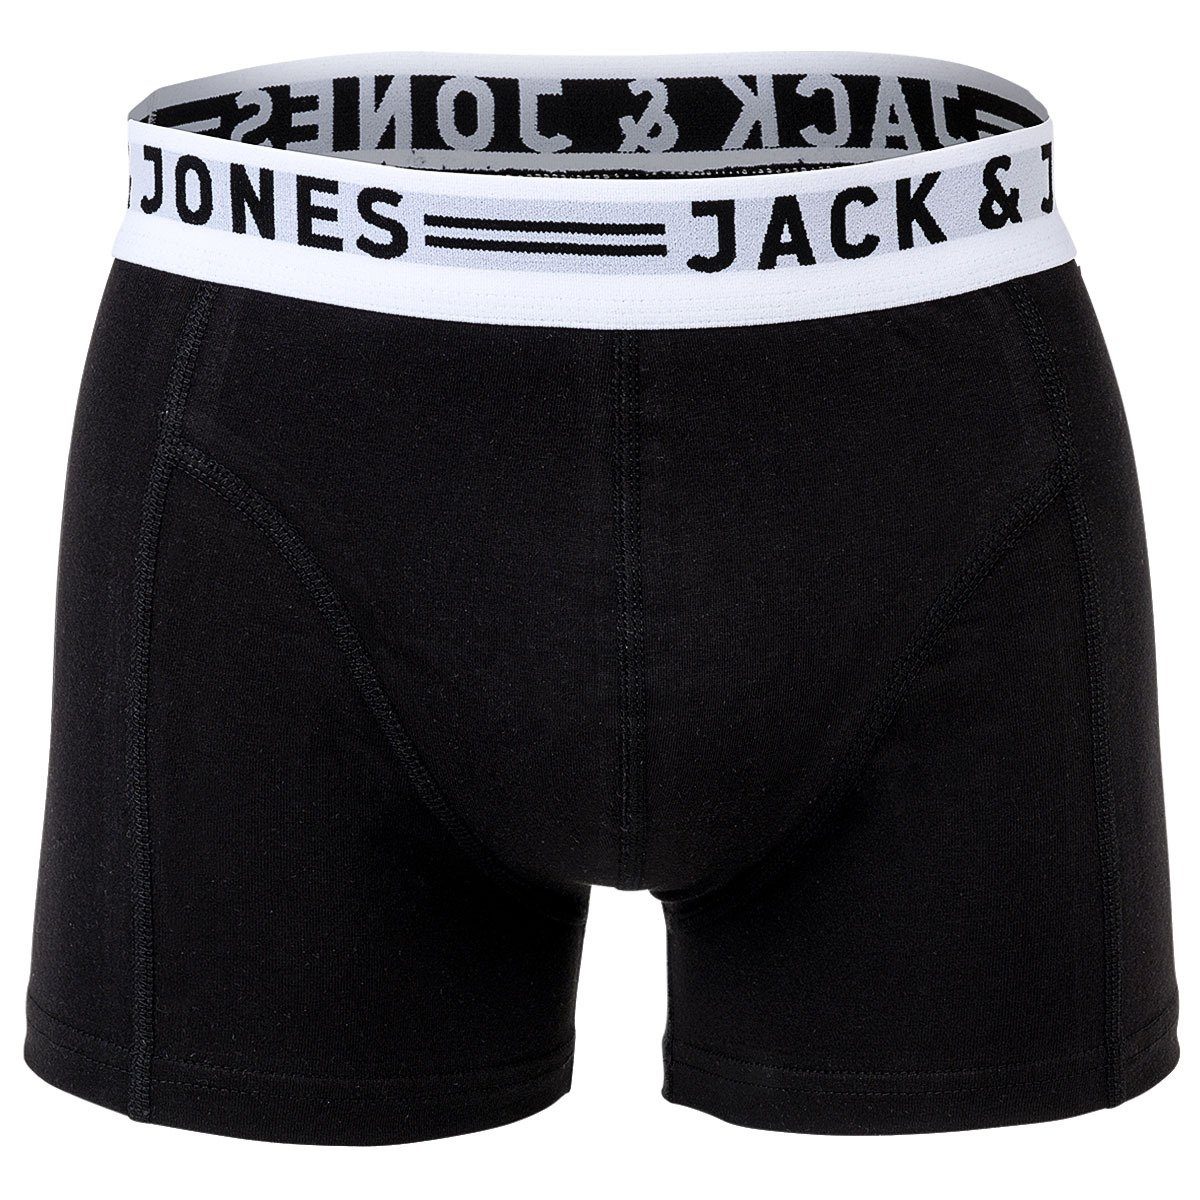 Jack Boxer Pack Shorts, 6er & Jones TRUNKS Boxer Schwarz/Weiß Herren - SENSE